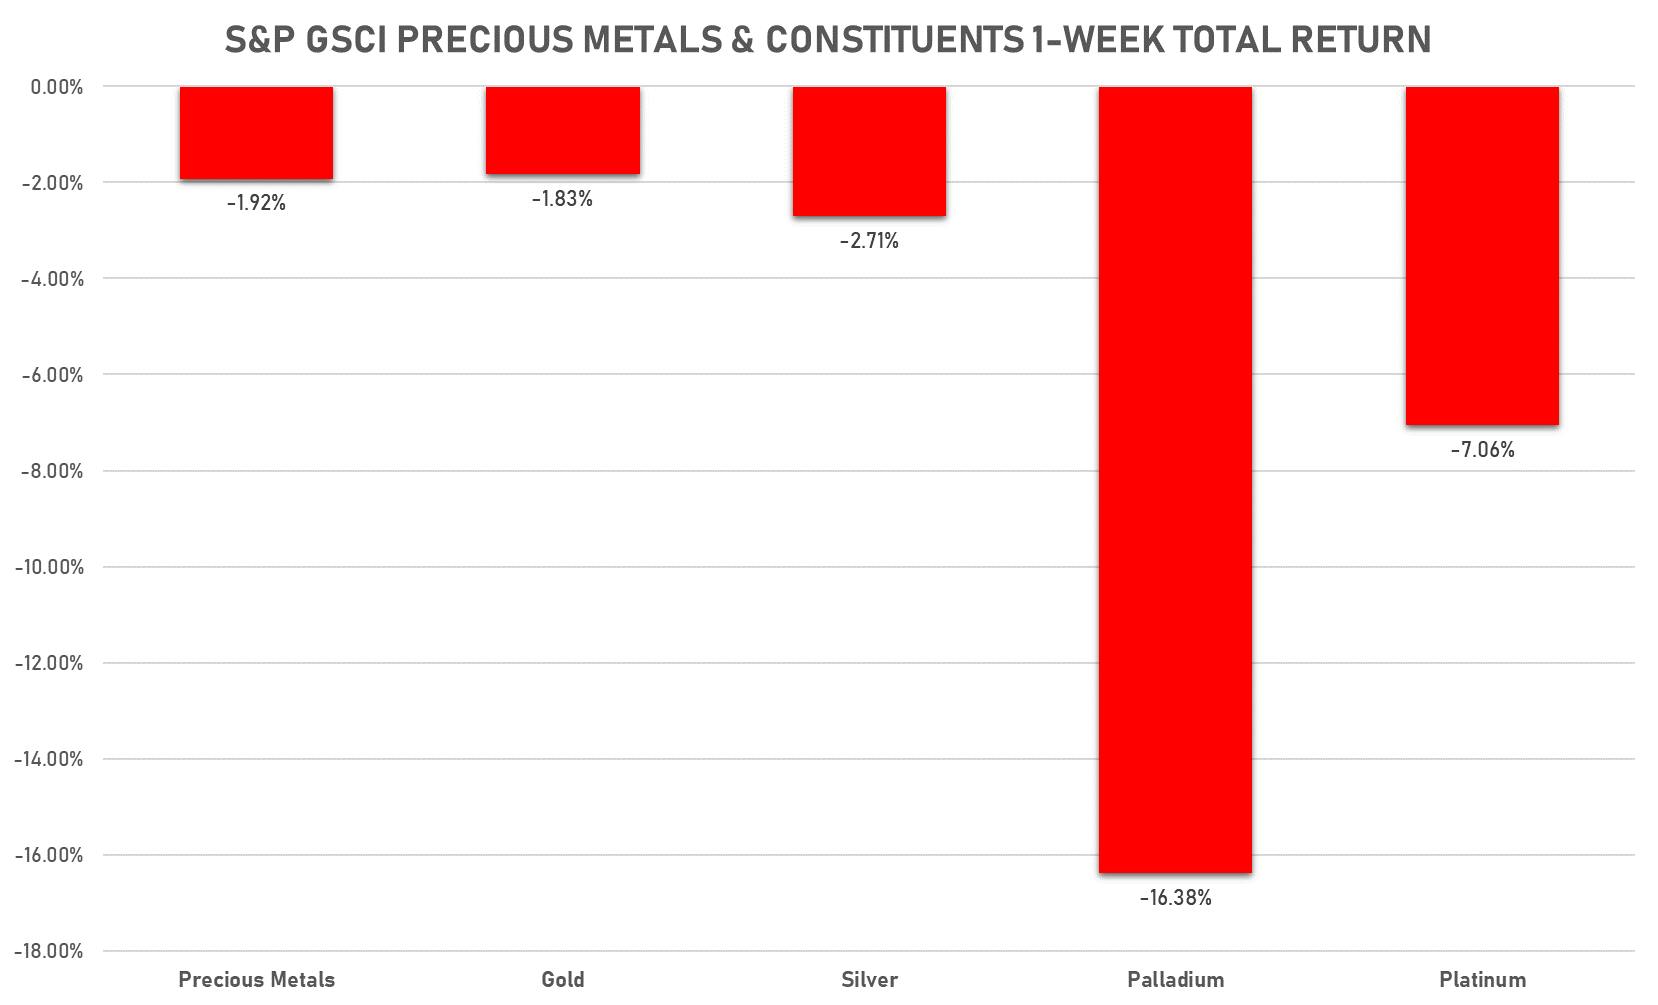 GSCI Precious Metals THis Week | Sources: phipost.com, FactSet data